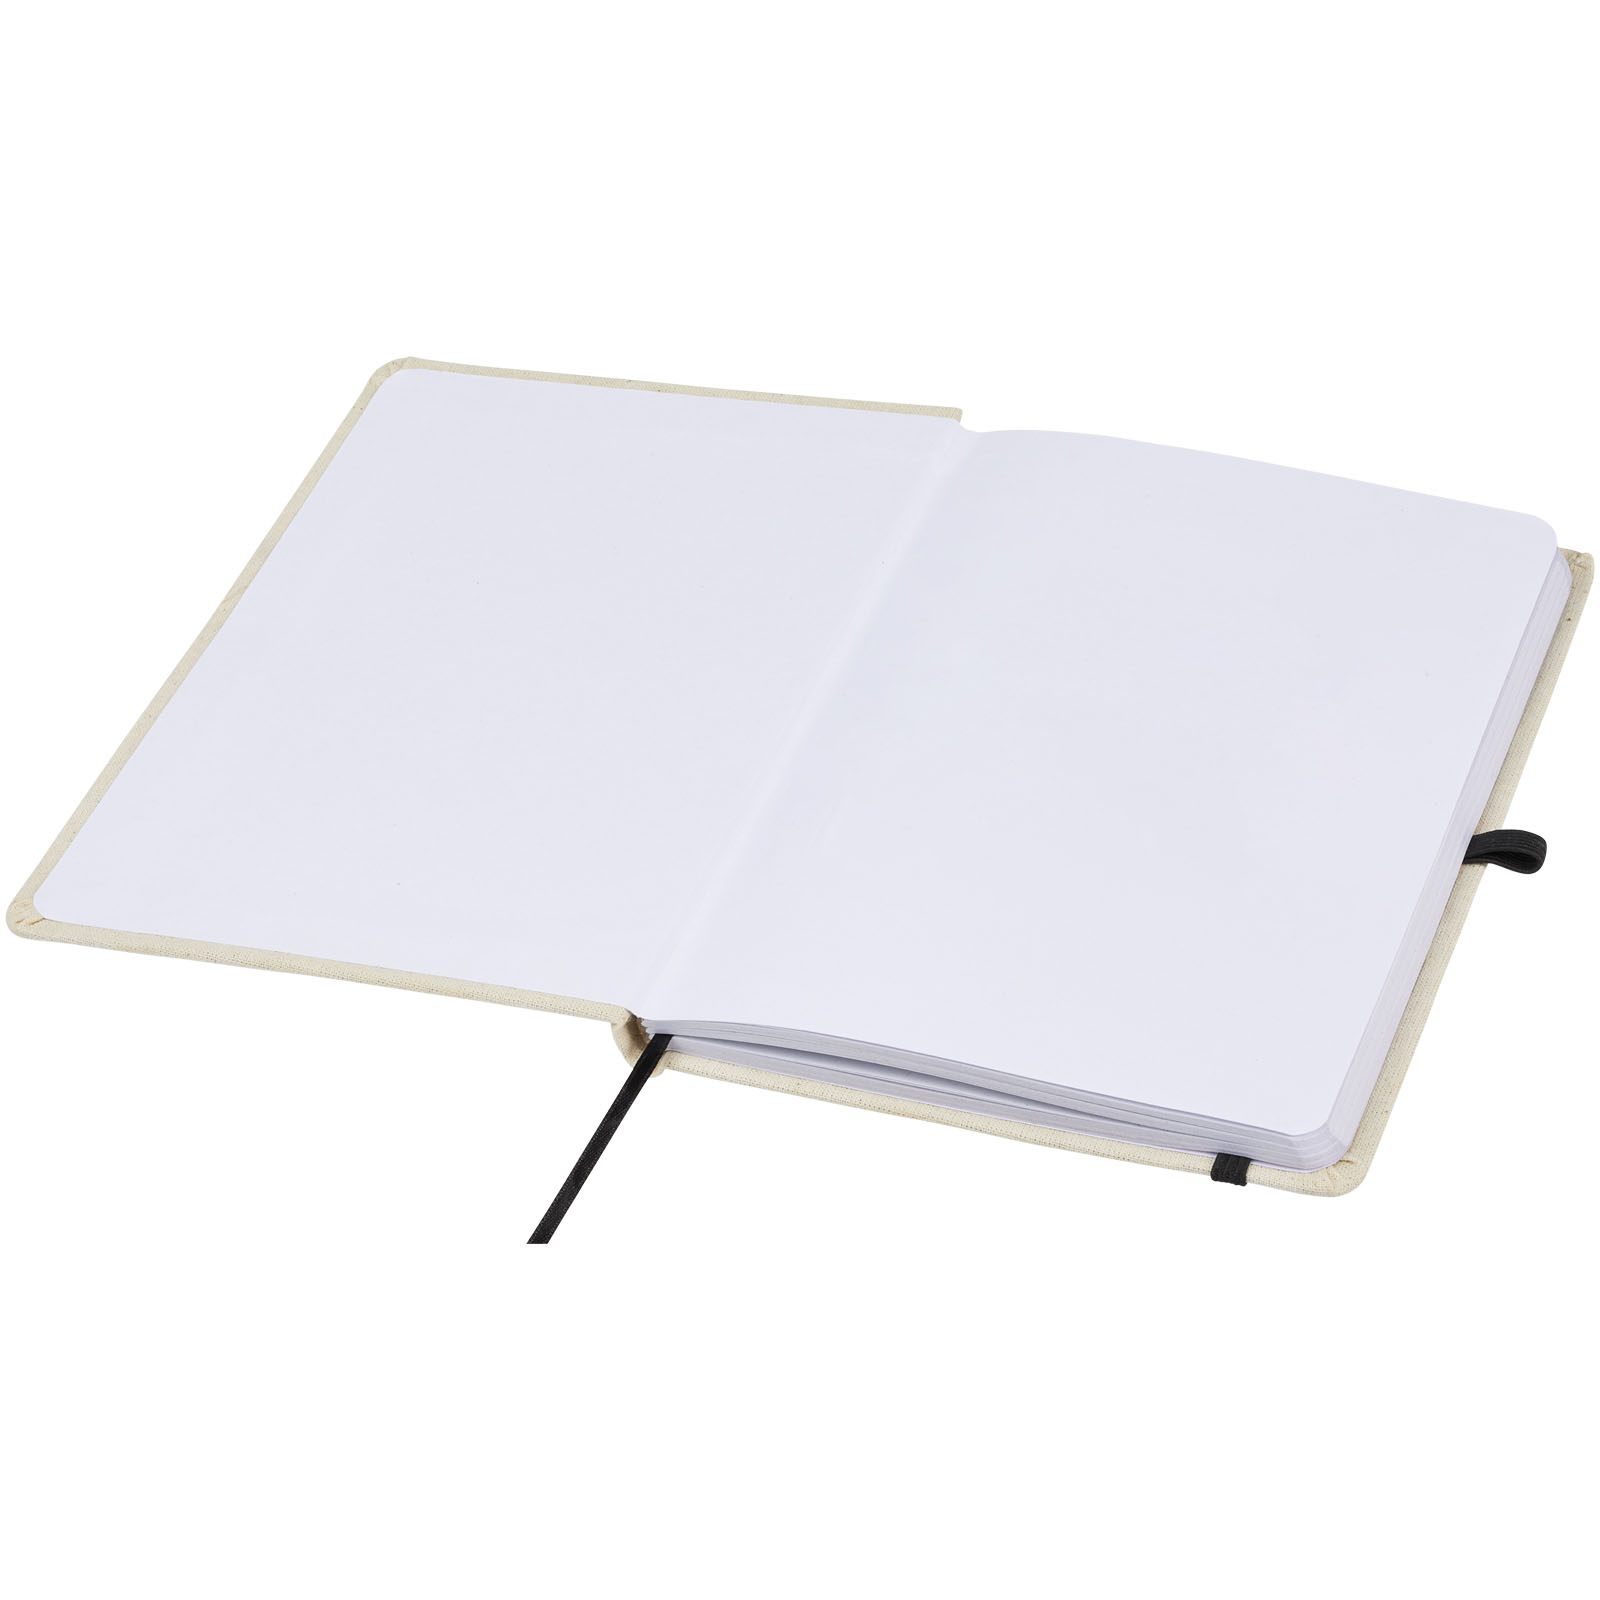 Advertising Hard cover notebooks - Tutico organic cotton hardcover notebook - 4